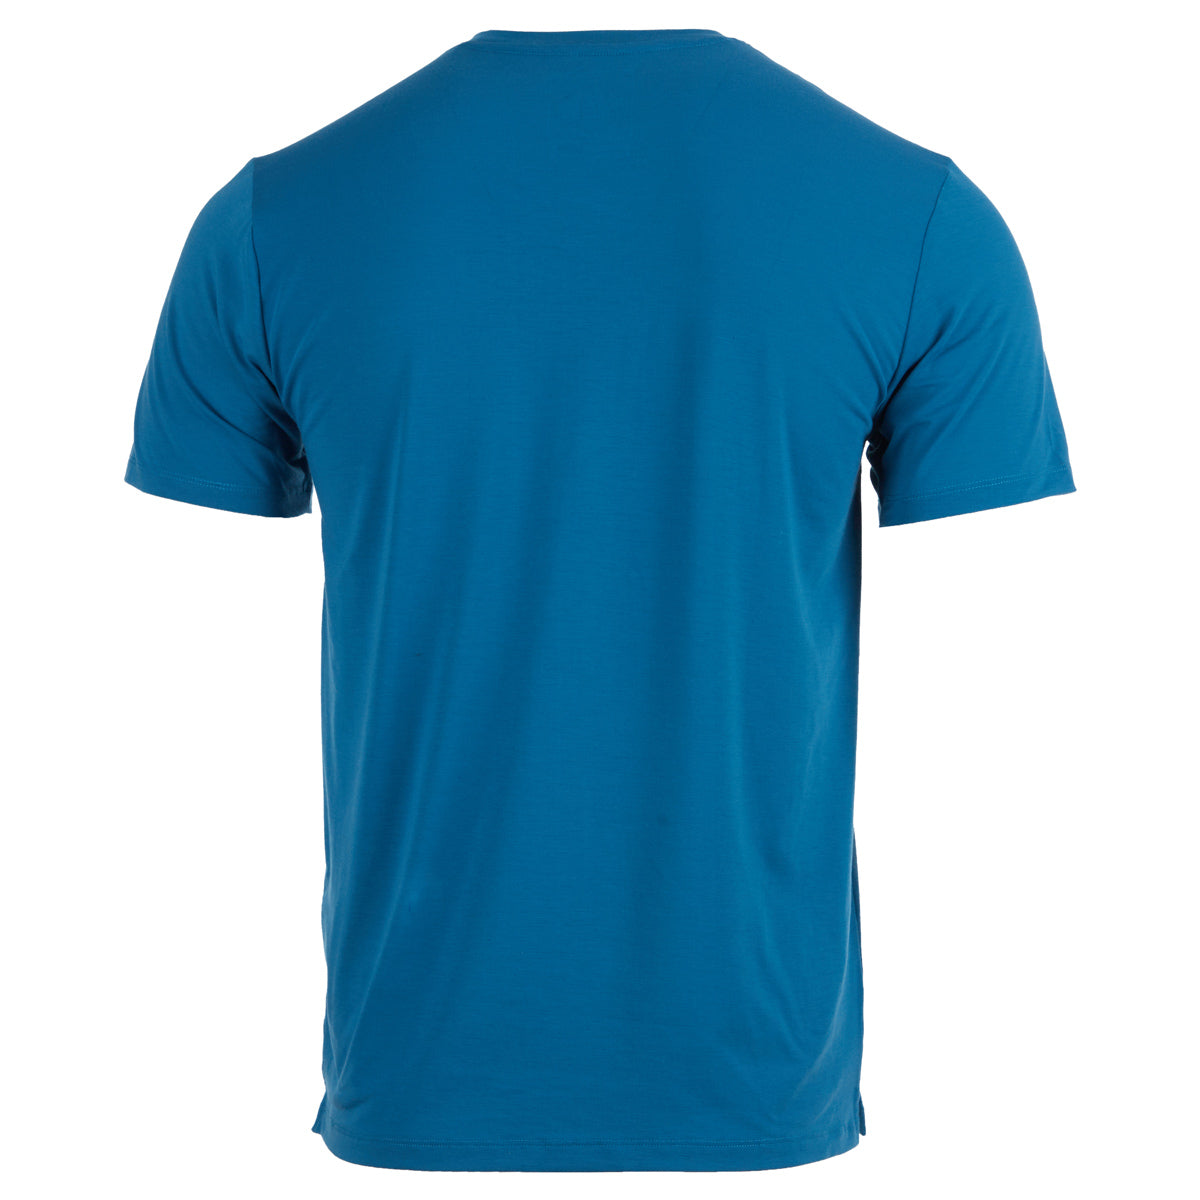 The North Face Men's Wander Short Sleeve Shirt